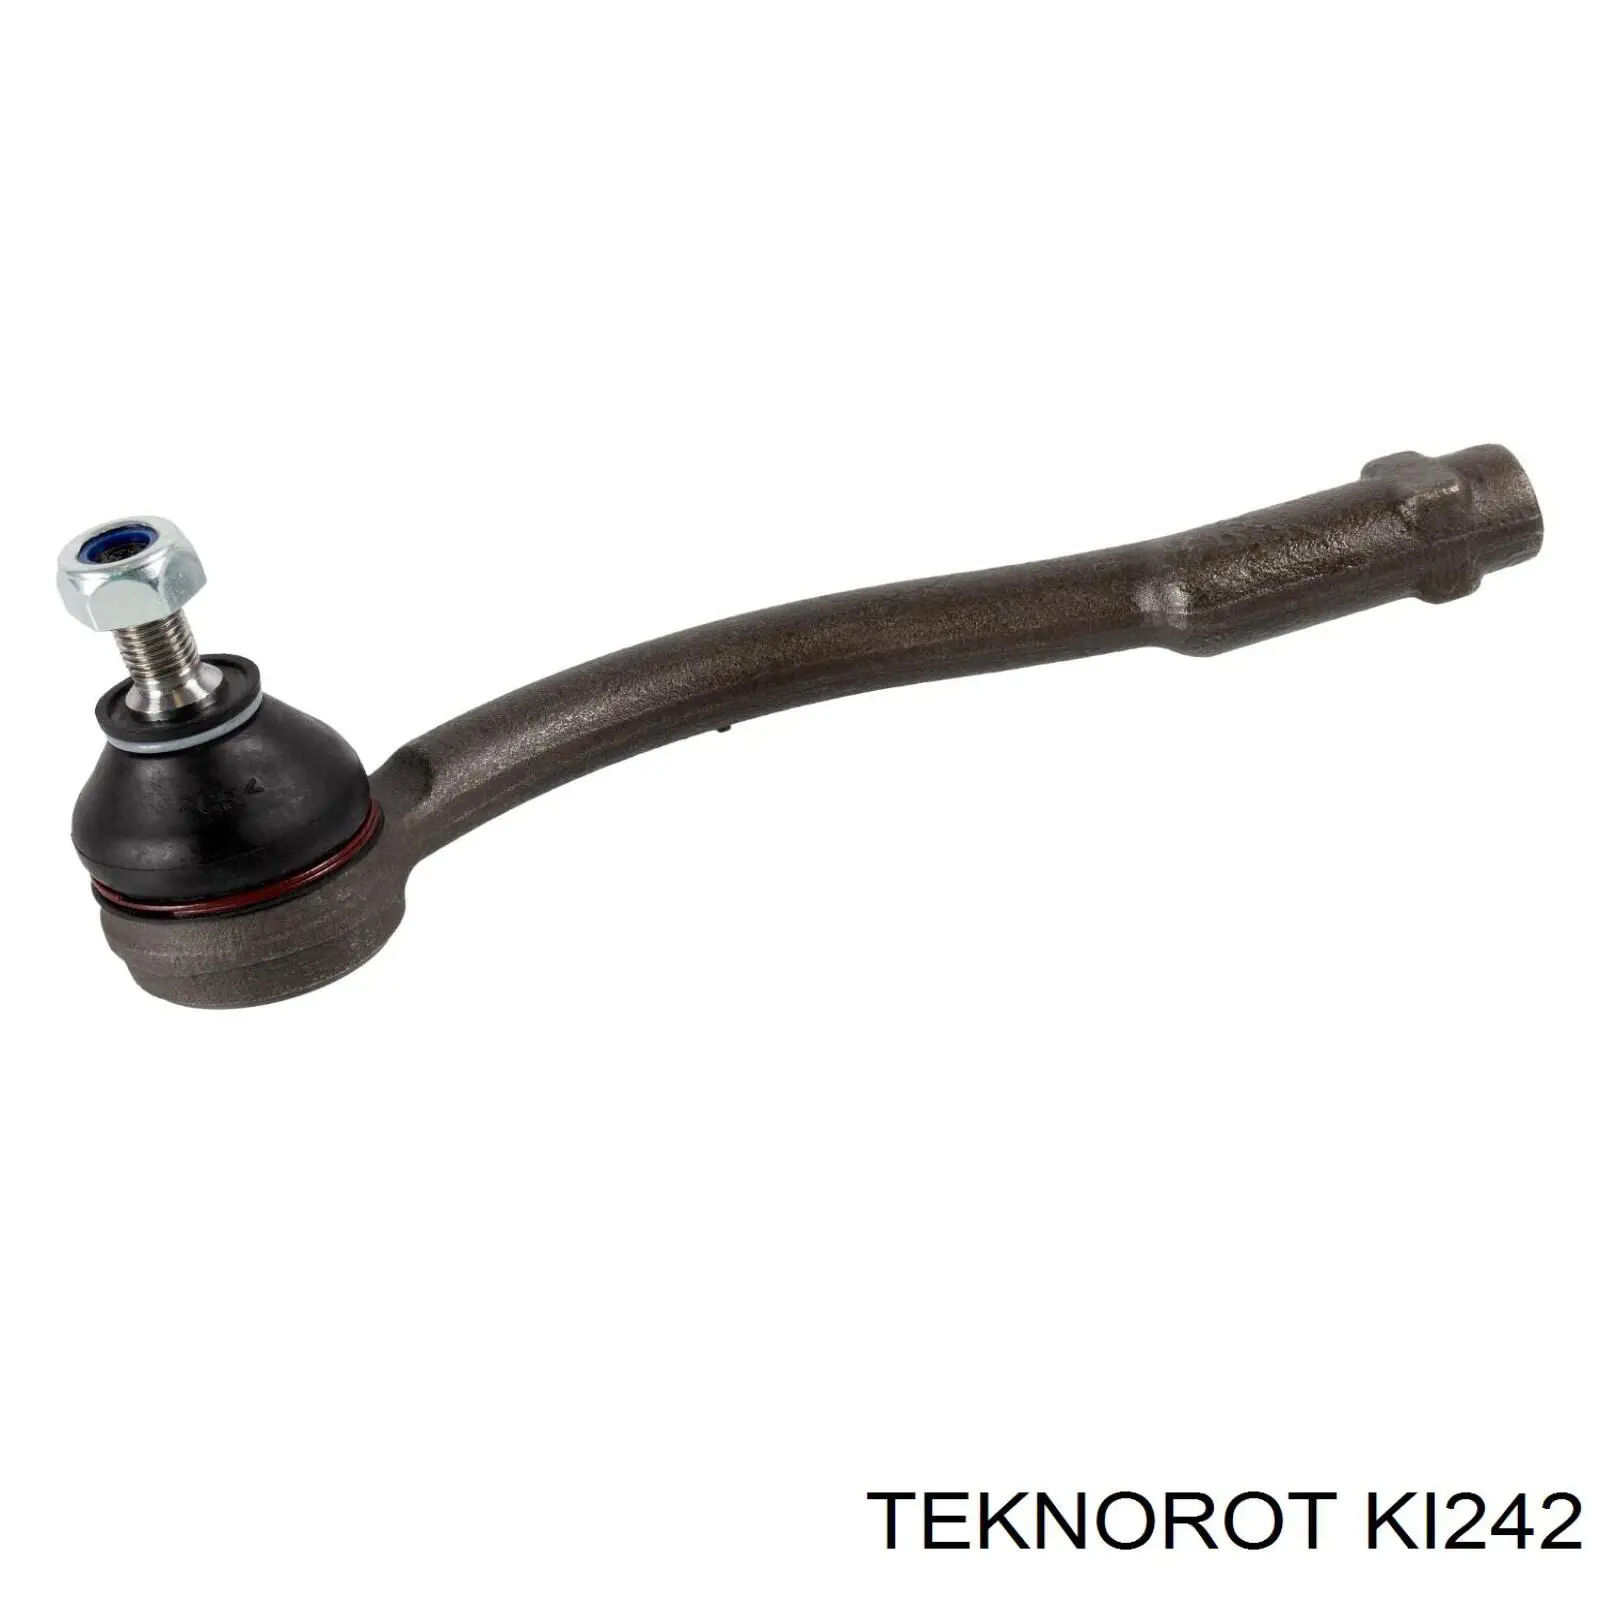 KI-242 Teknorot rótula barra de acoplamiento exterior